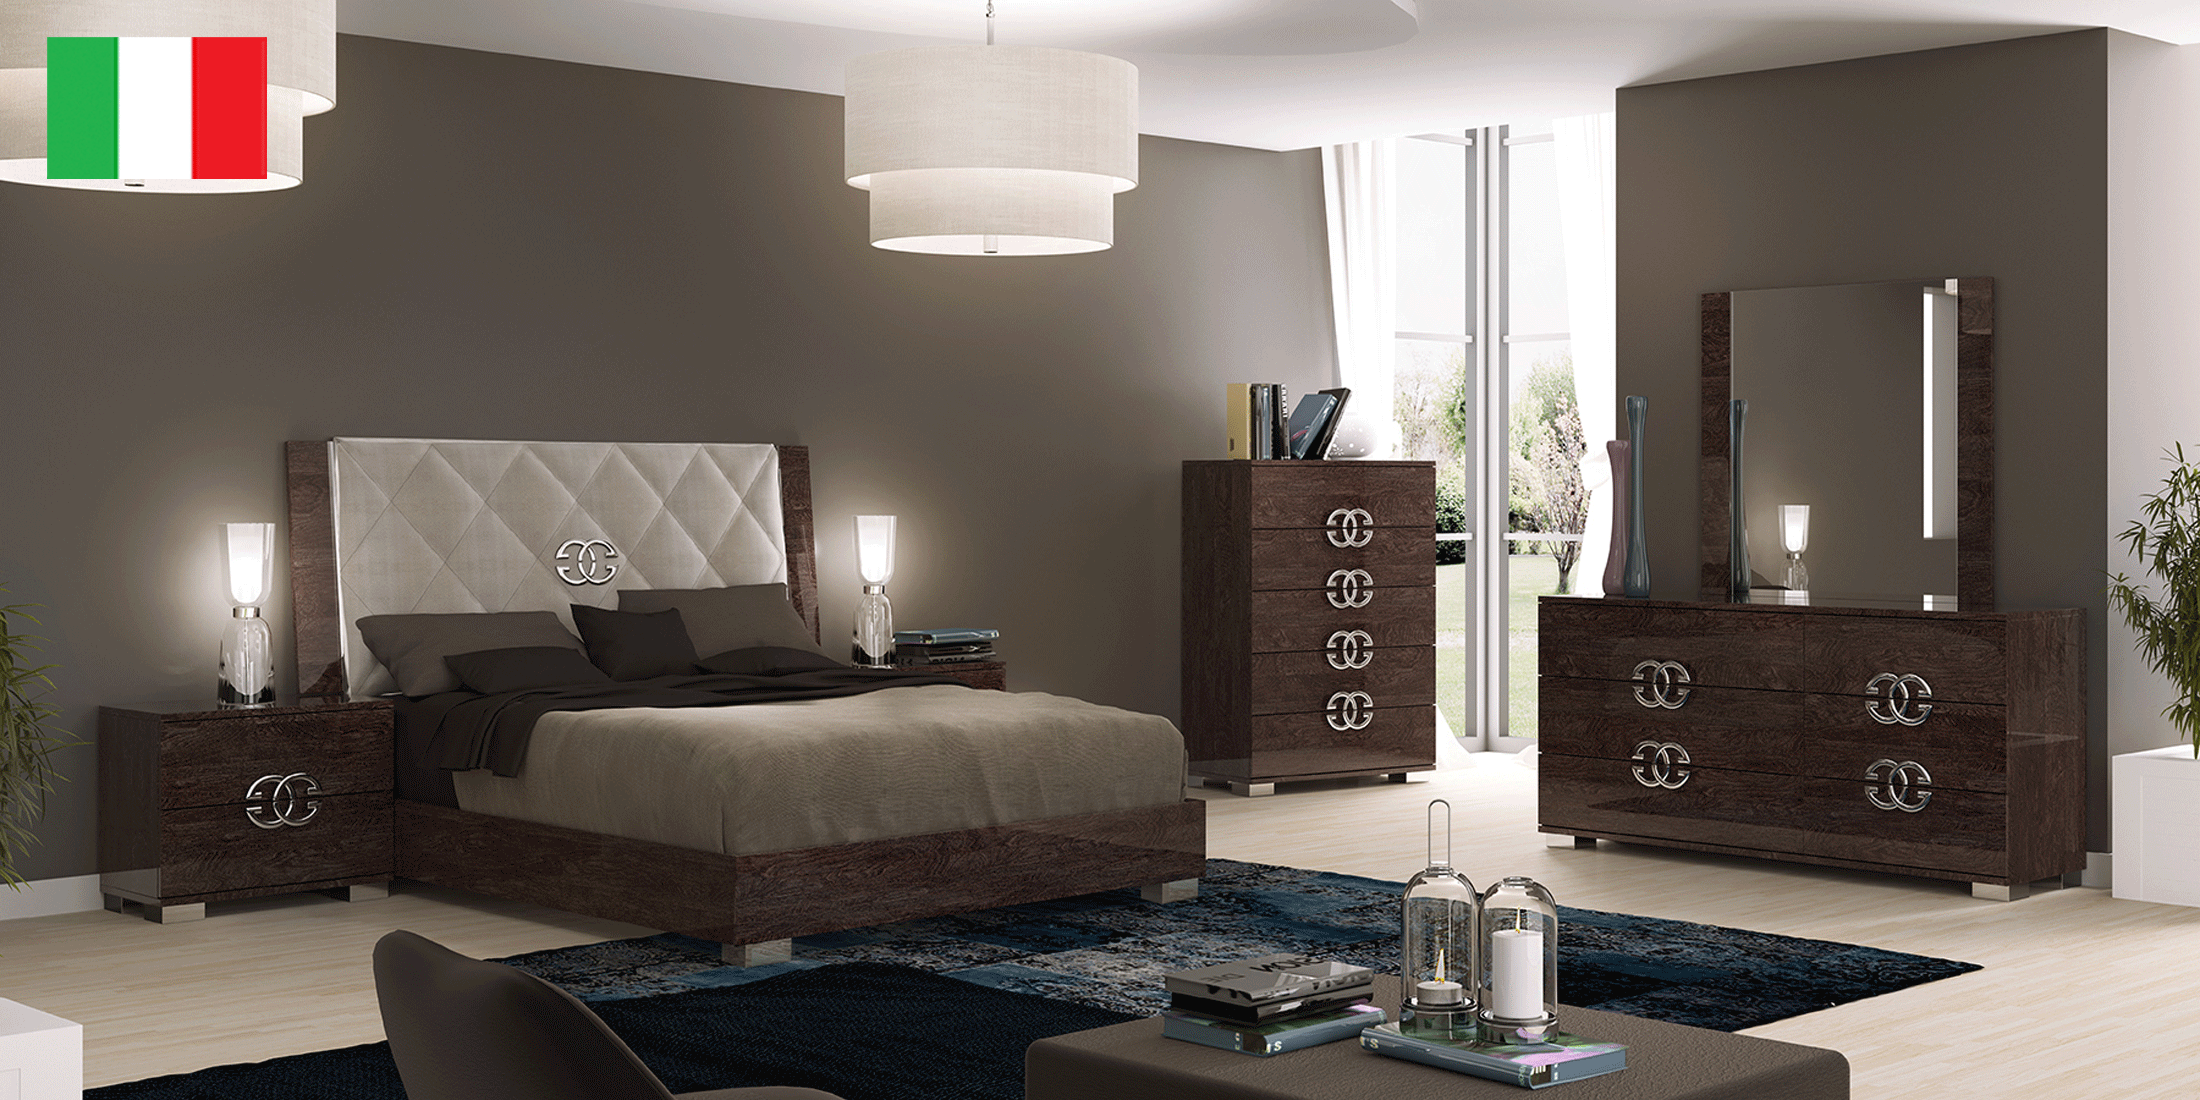 Brands Franco AZKARY II CONSOLES, Spain Prestige DELUXE Bedroom